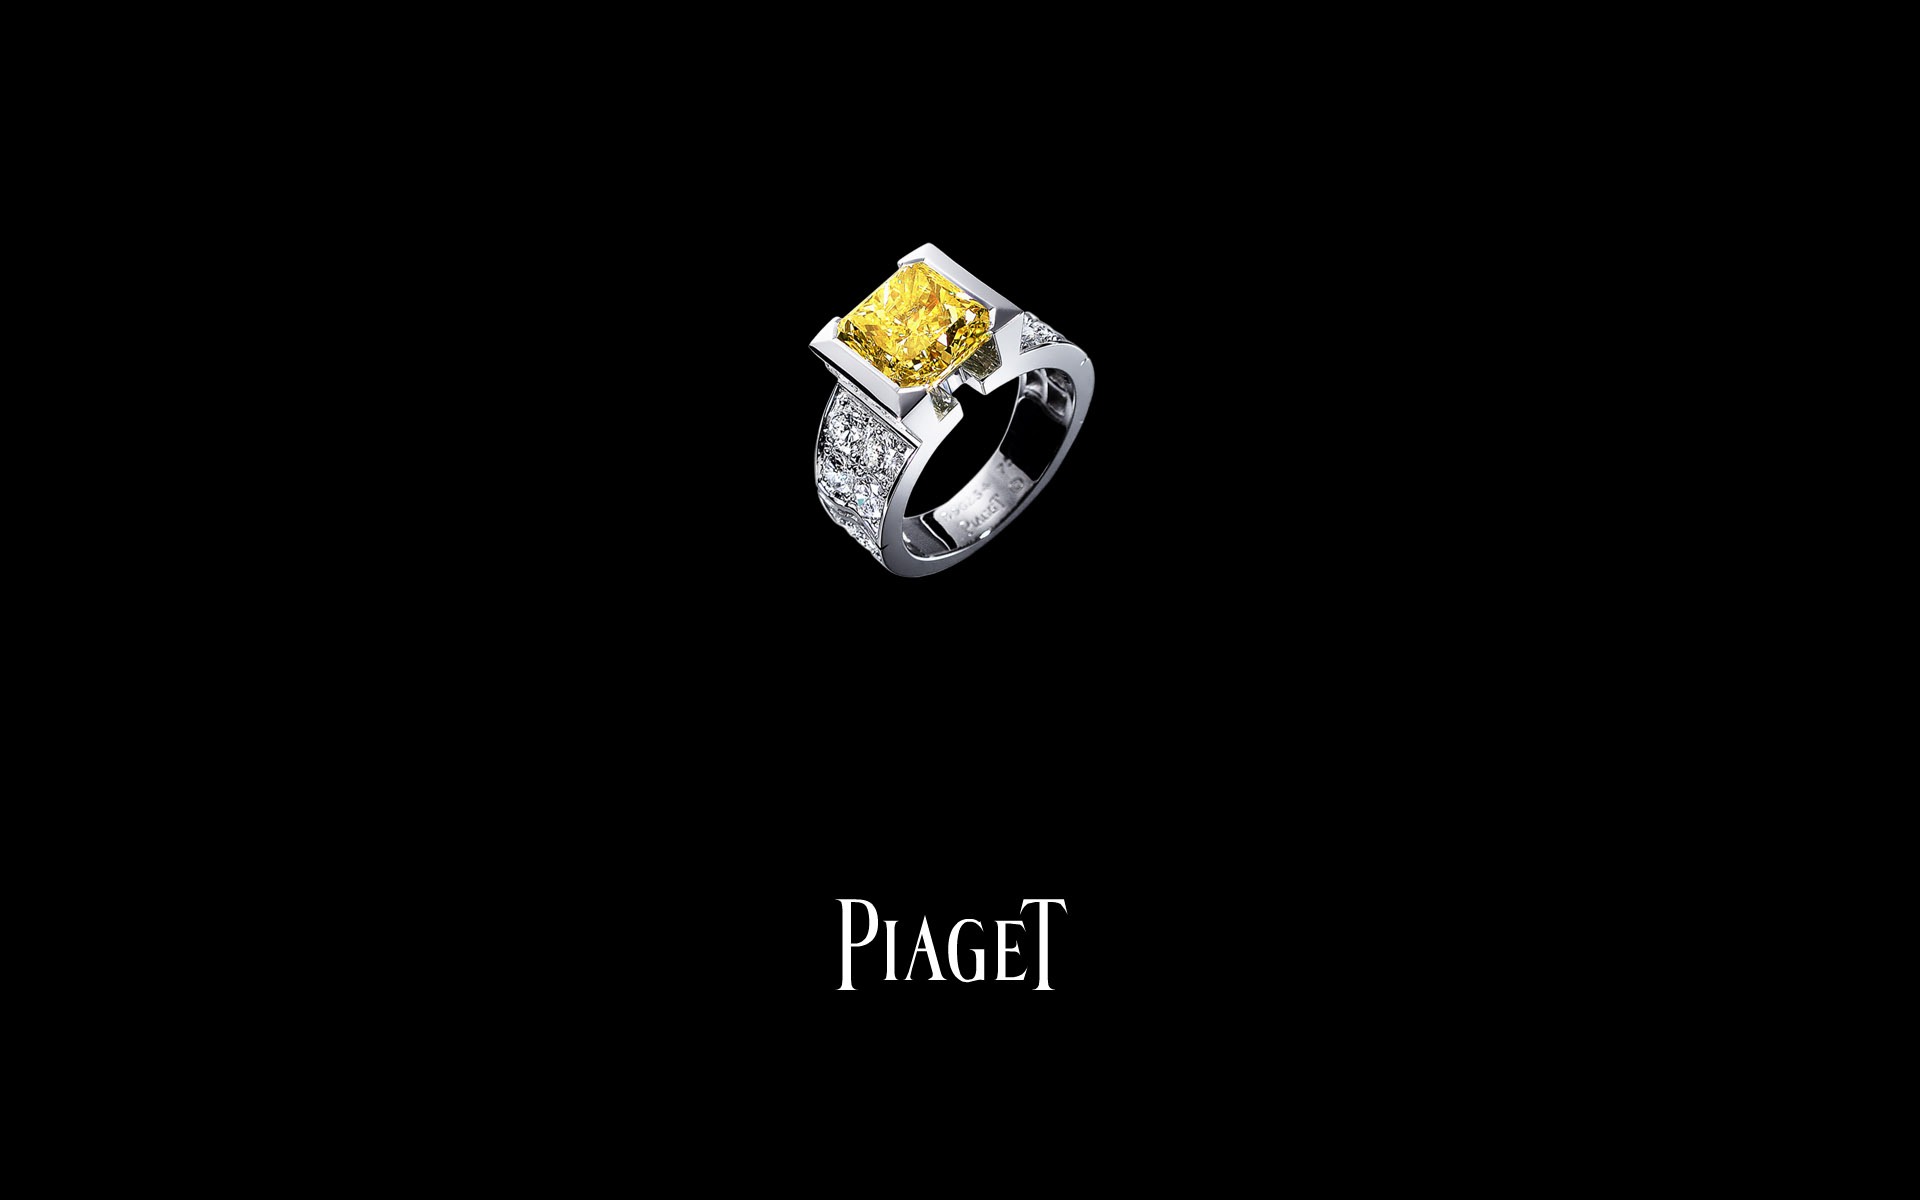 Piaget diamond jewelry wallpaper (4) #10 - 1920x1200